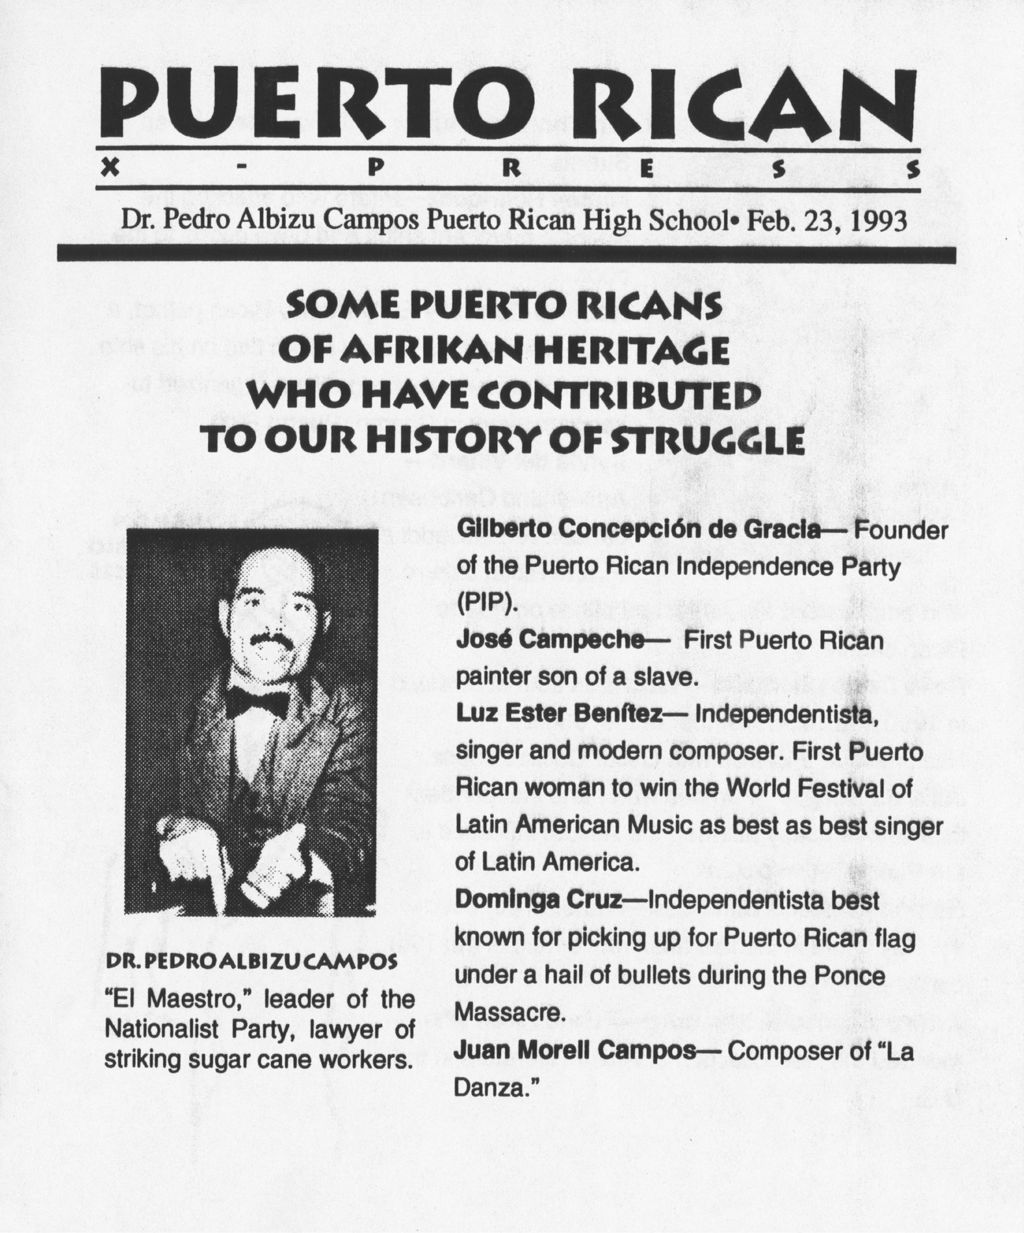 Miniature of Puerto Rican X-Press